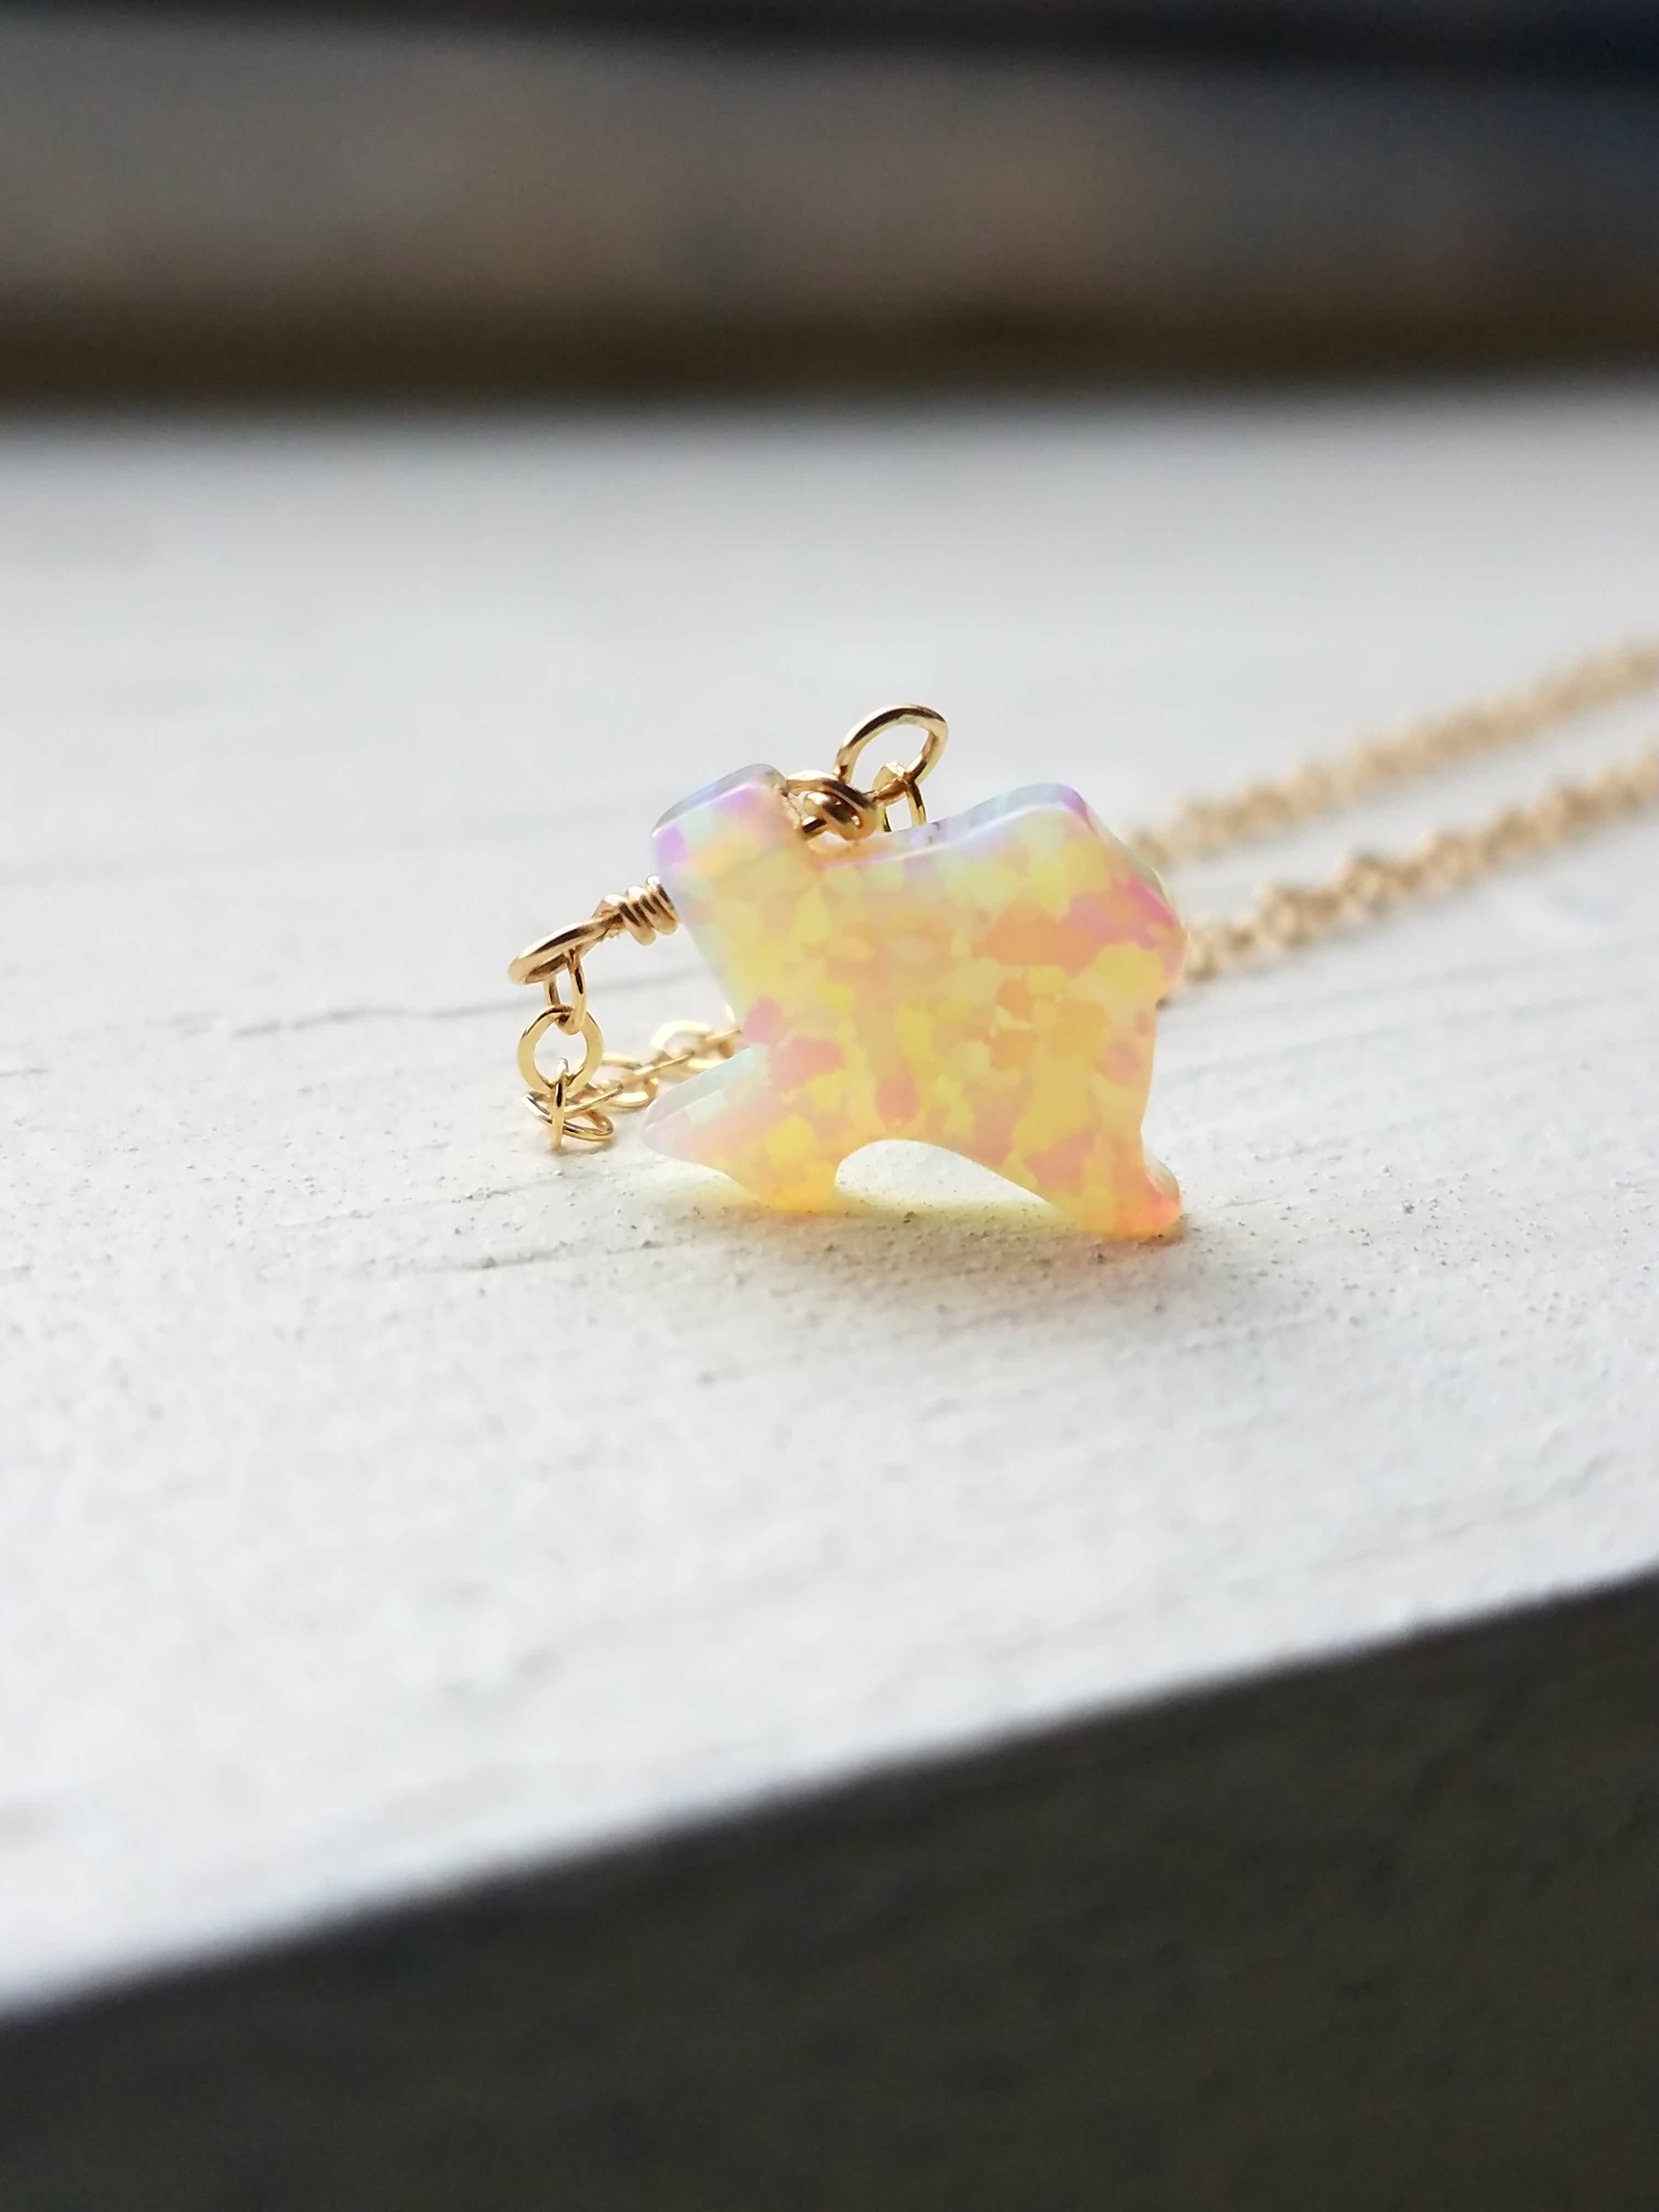 Tiny Texas Necklace **Best Gift Idea**